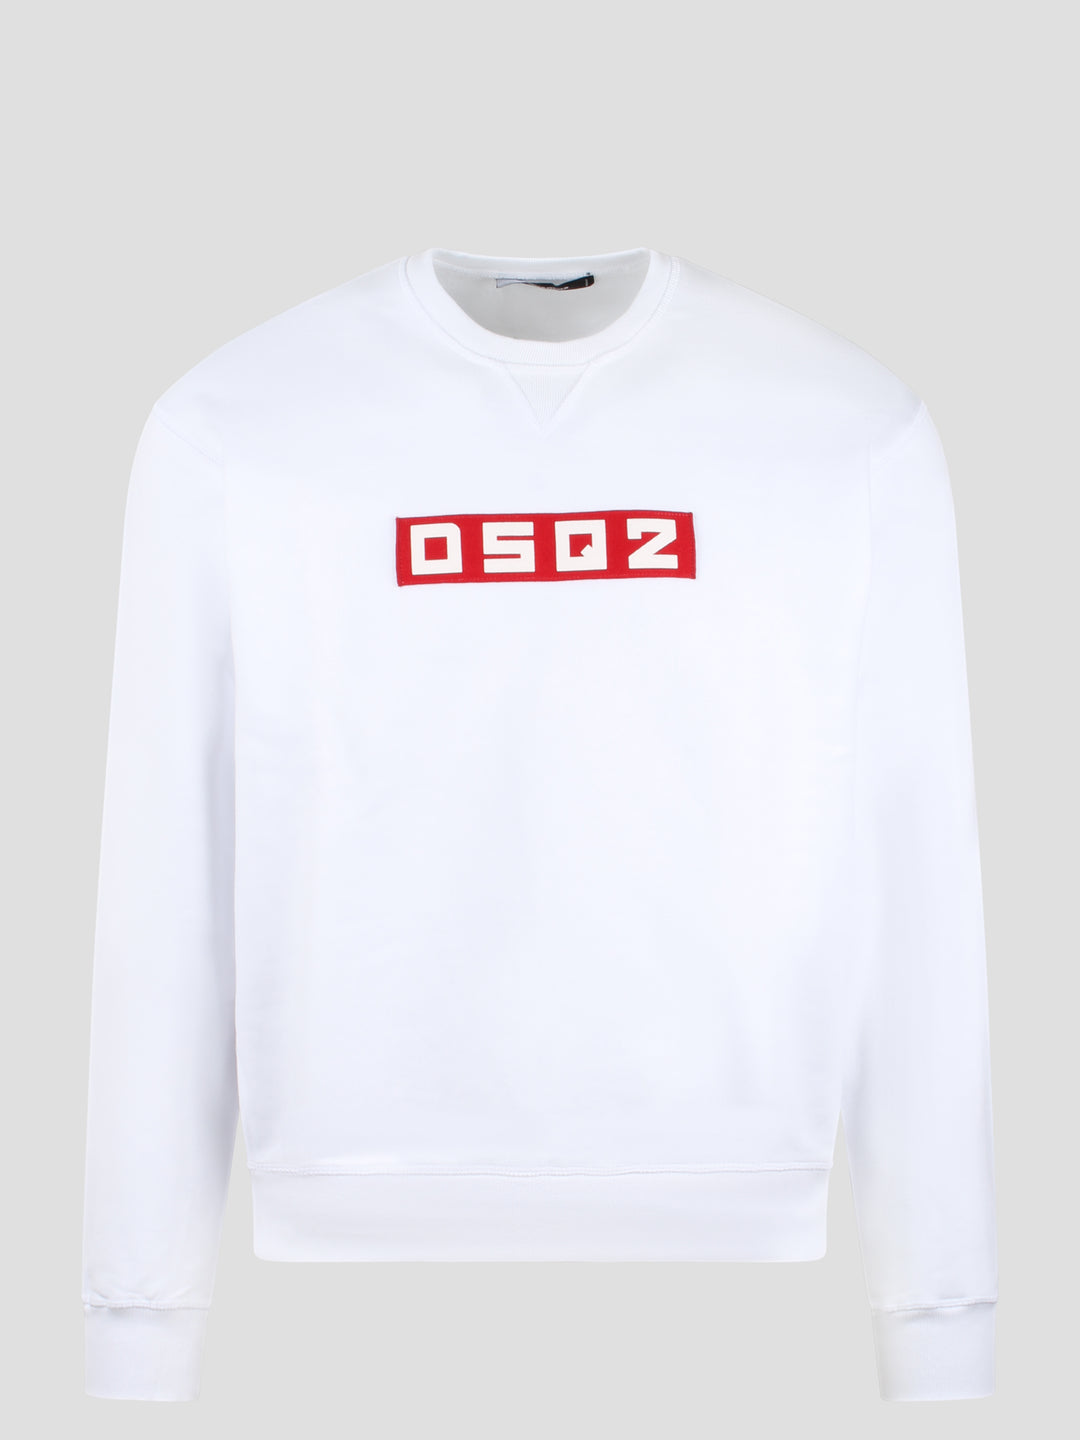 Dsq2 cool fit crewneck sweatshirt